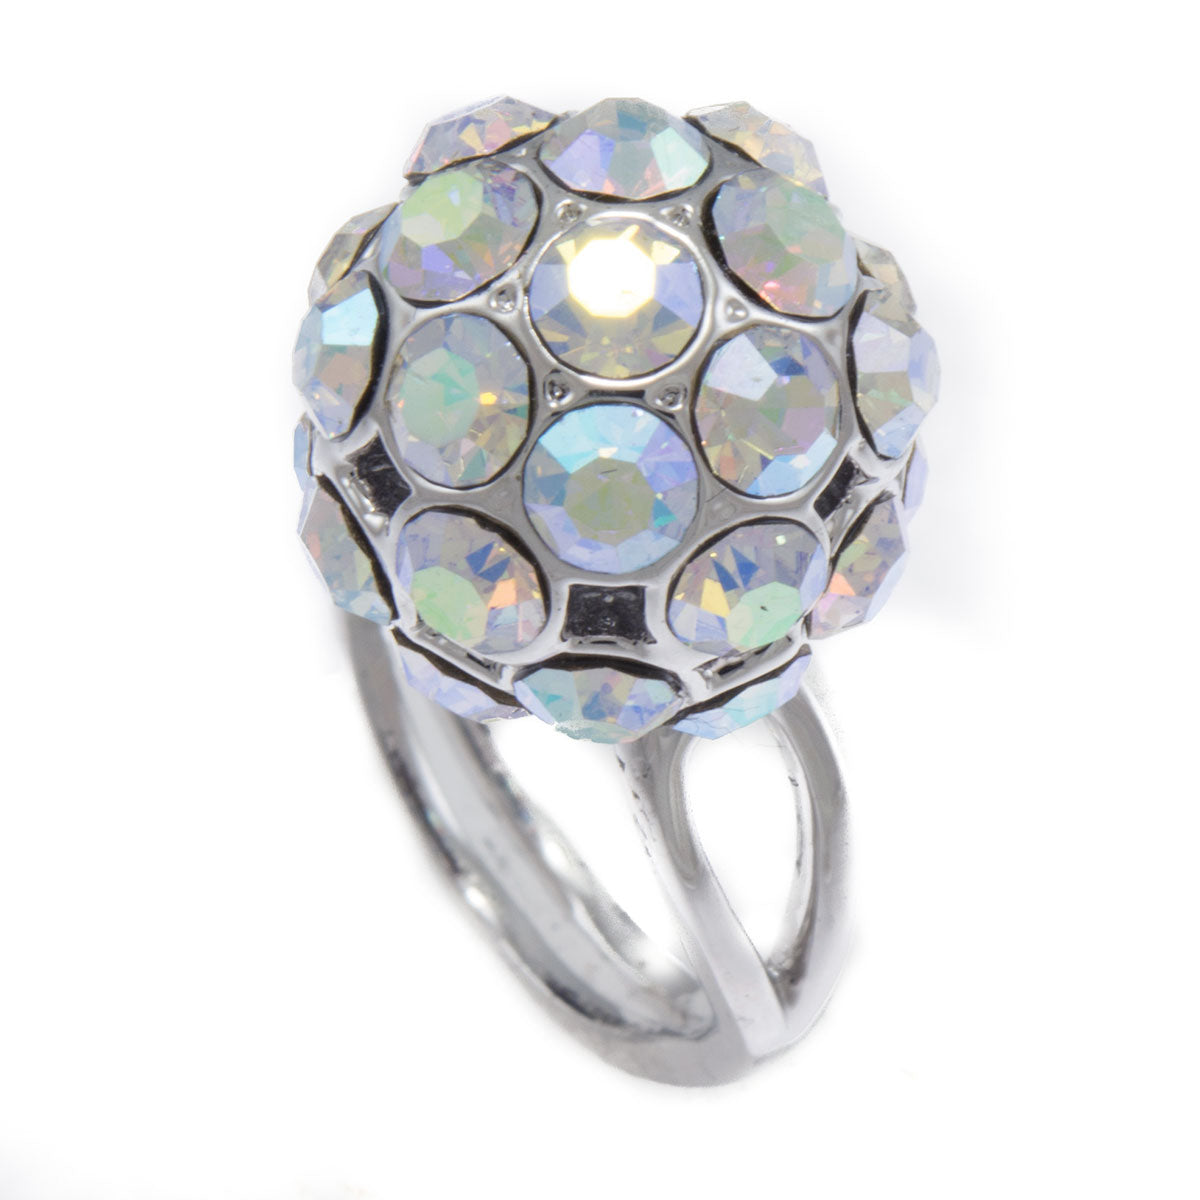 Gifts Infinity Glitzy CZ Swarovski Ladies Bridal Ring Full Metal Ring Sterling Silver Princess Stone Ring